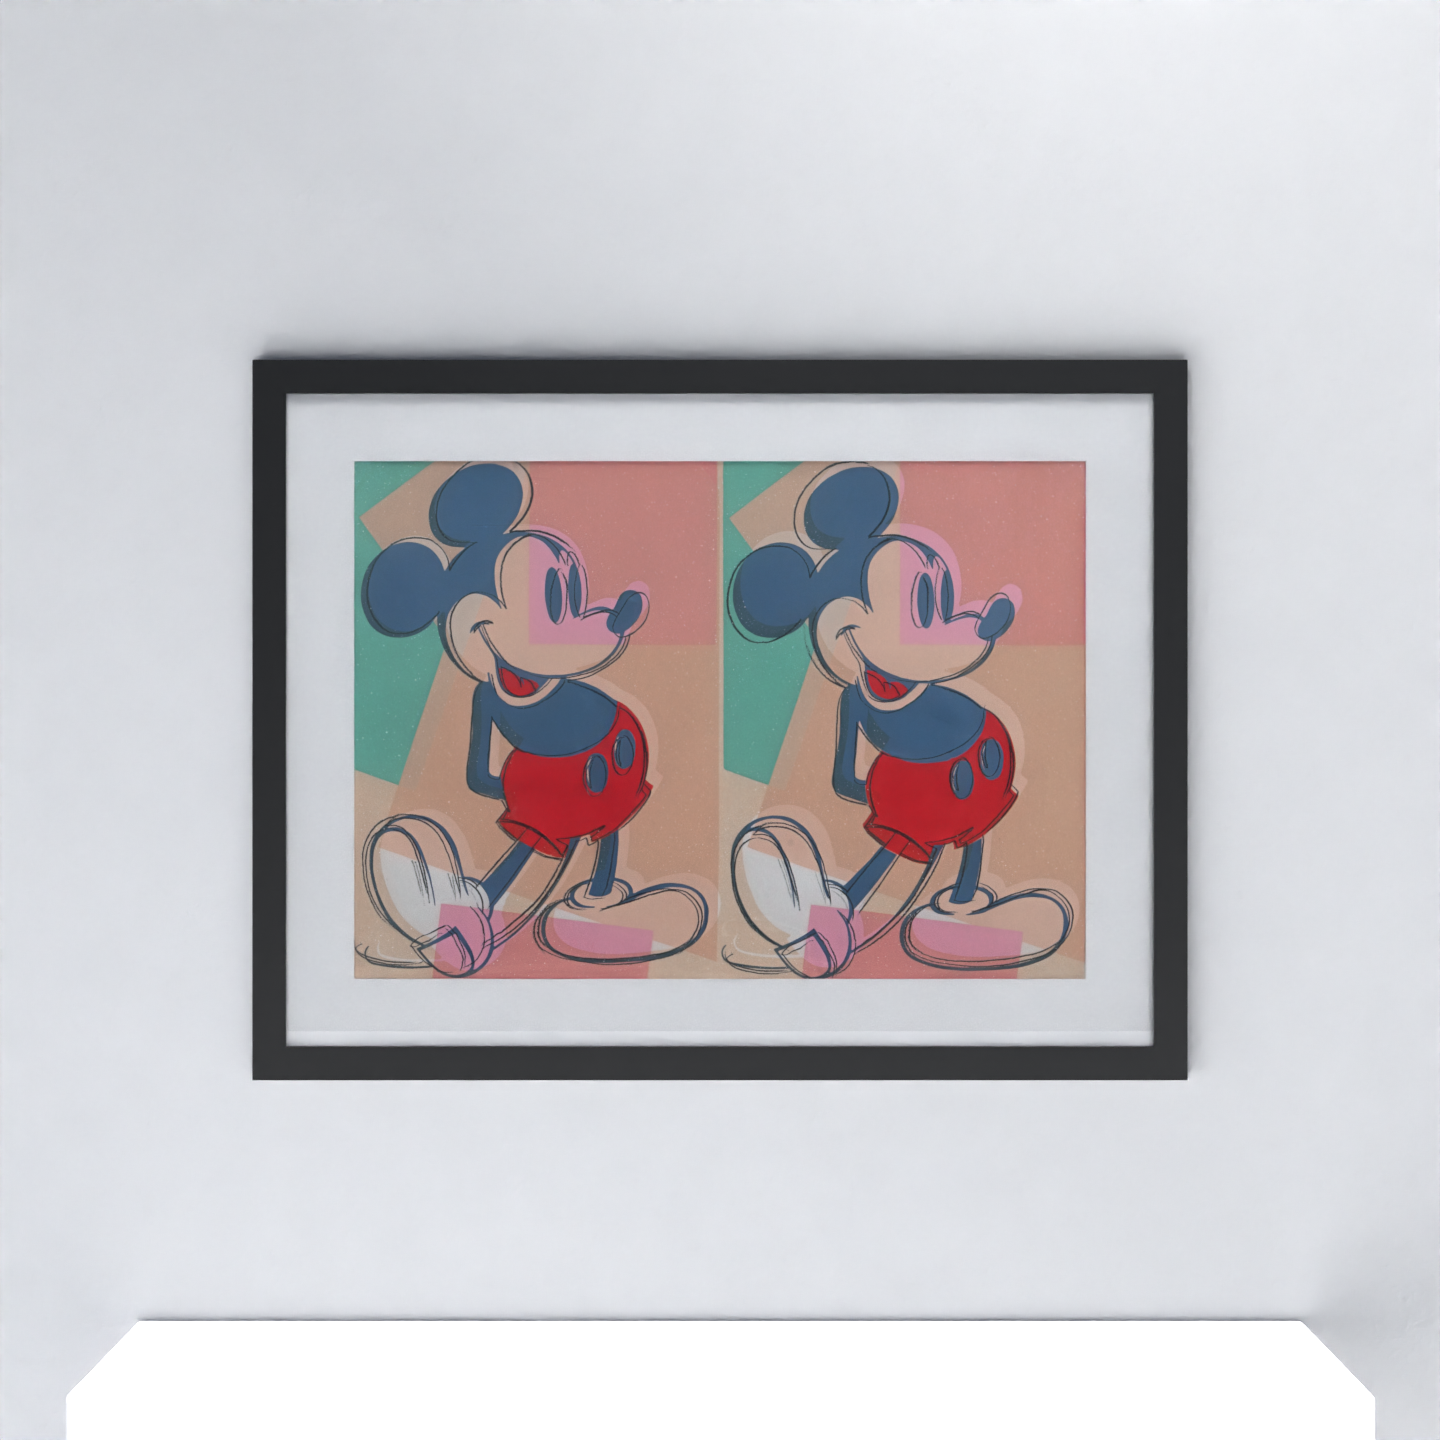 Double Mickey